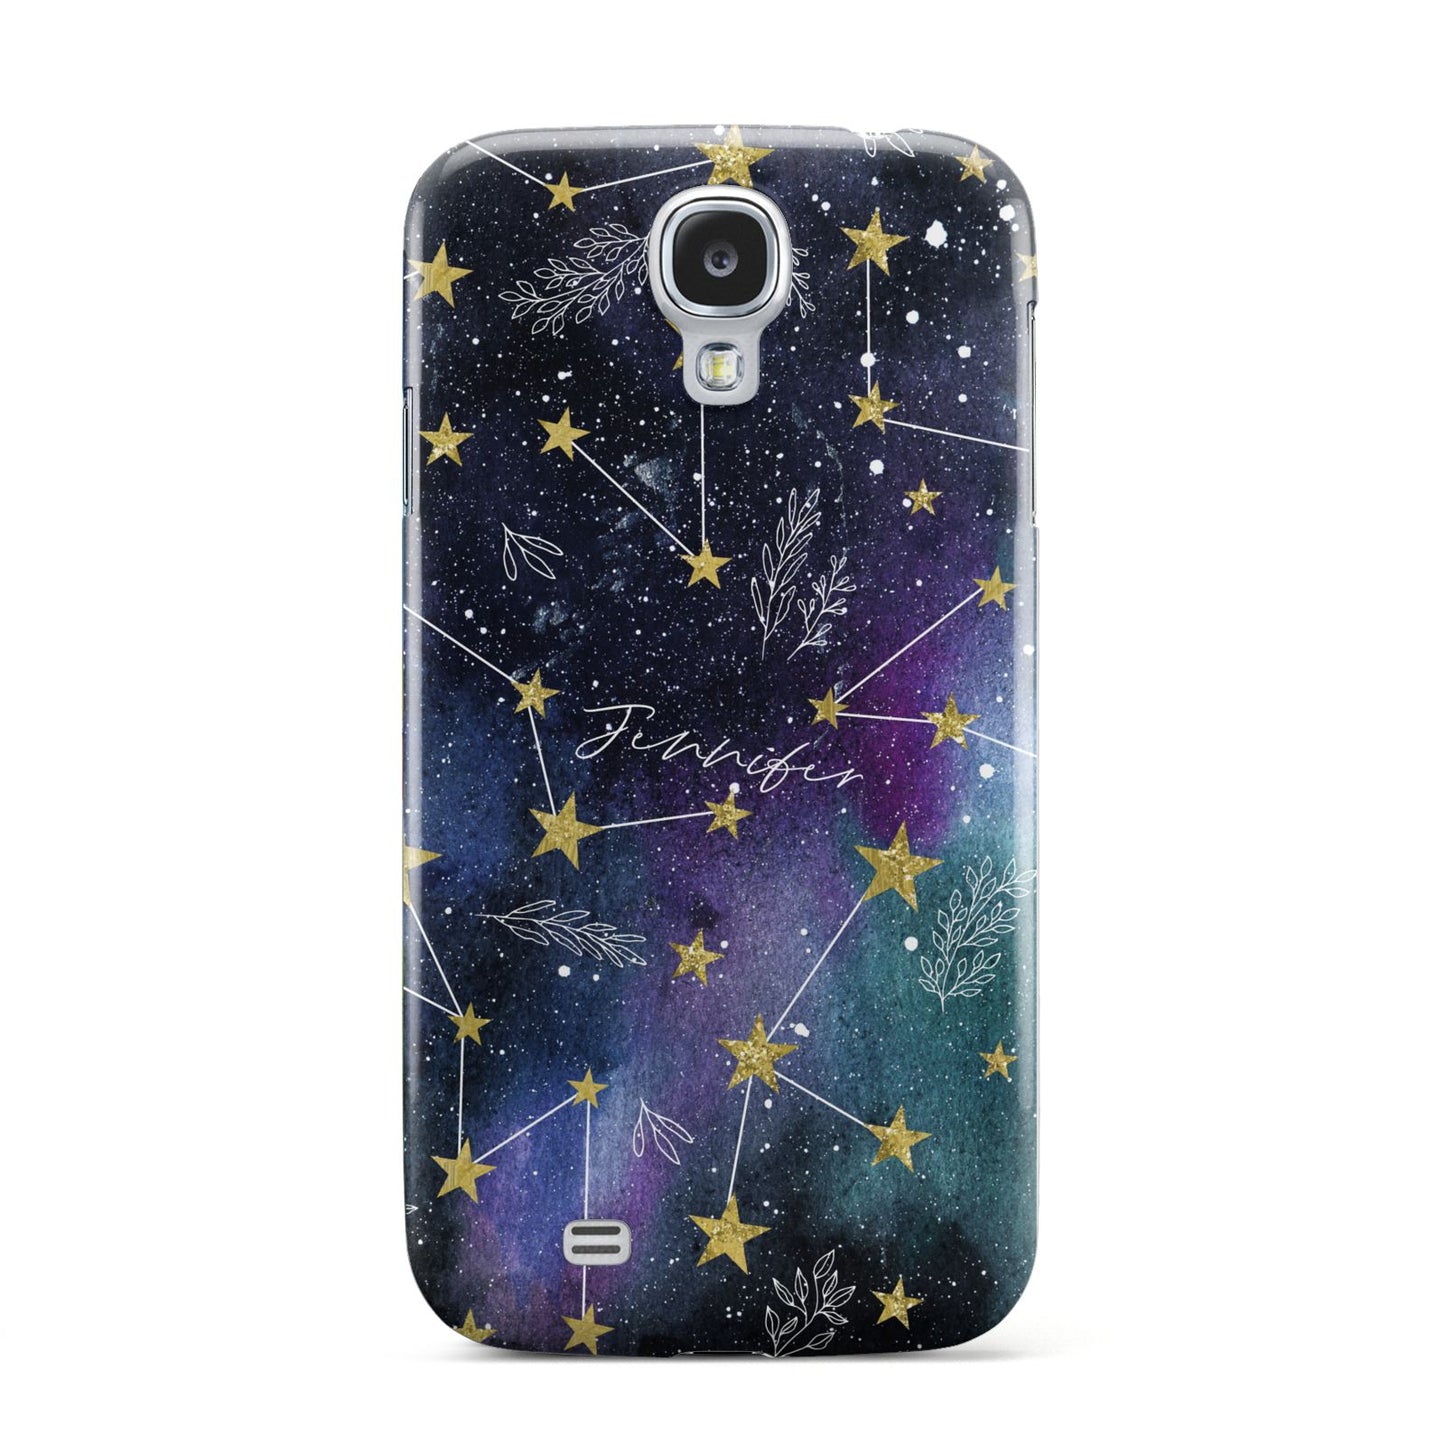 Personalised Constellation Samsung Galaxy S4 Case